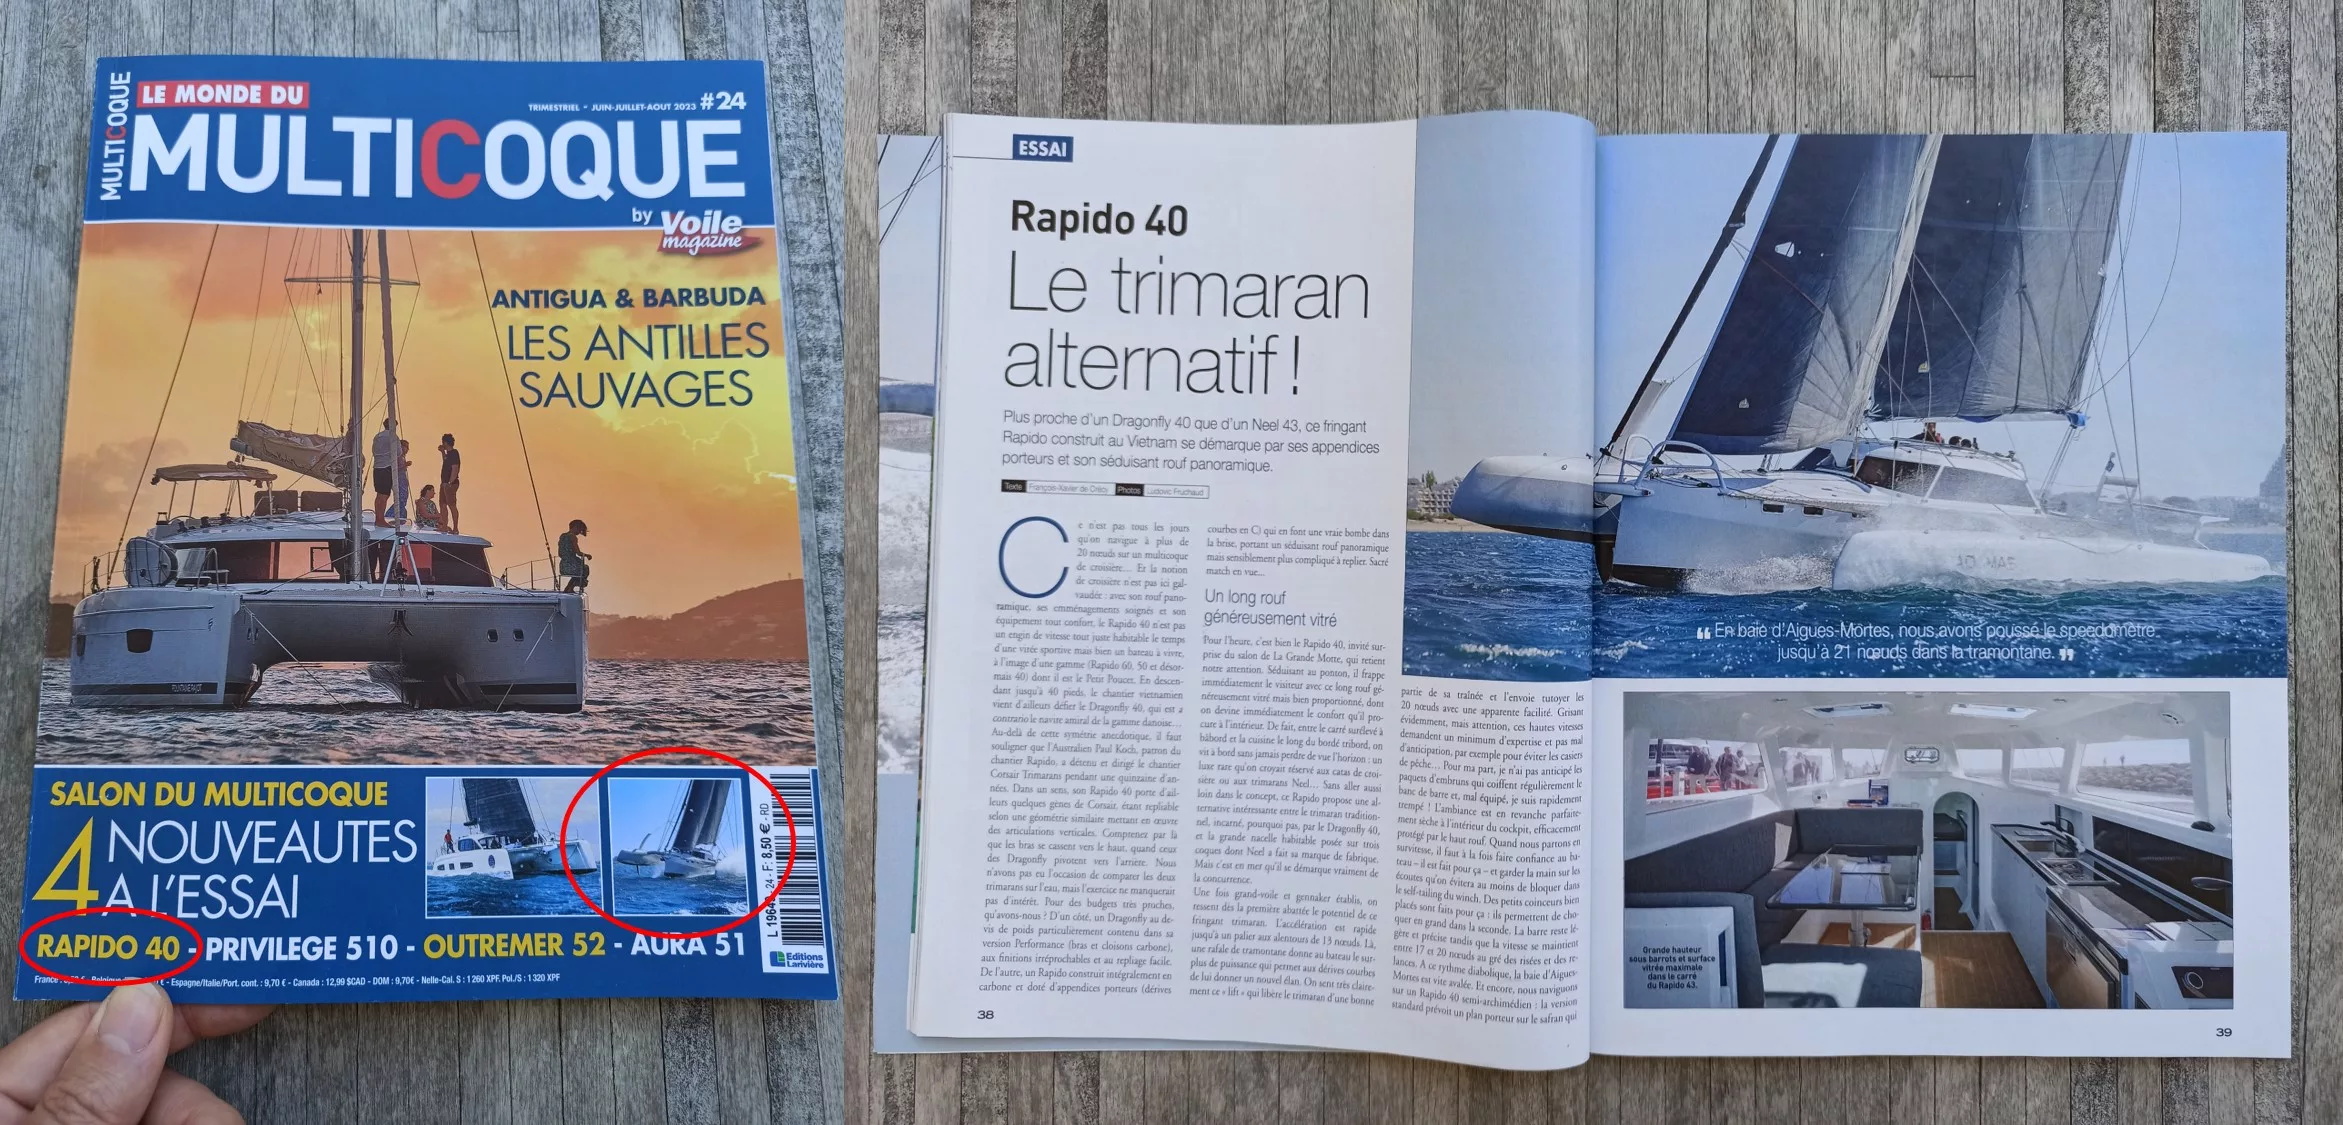 Rapido 40: The Alternative Trimaran, Le Monde Multiocoque, by Voile Magazine